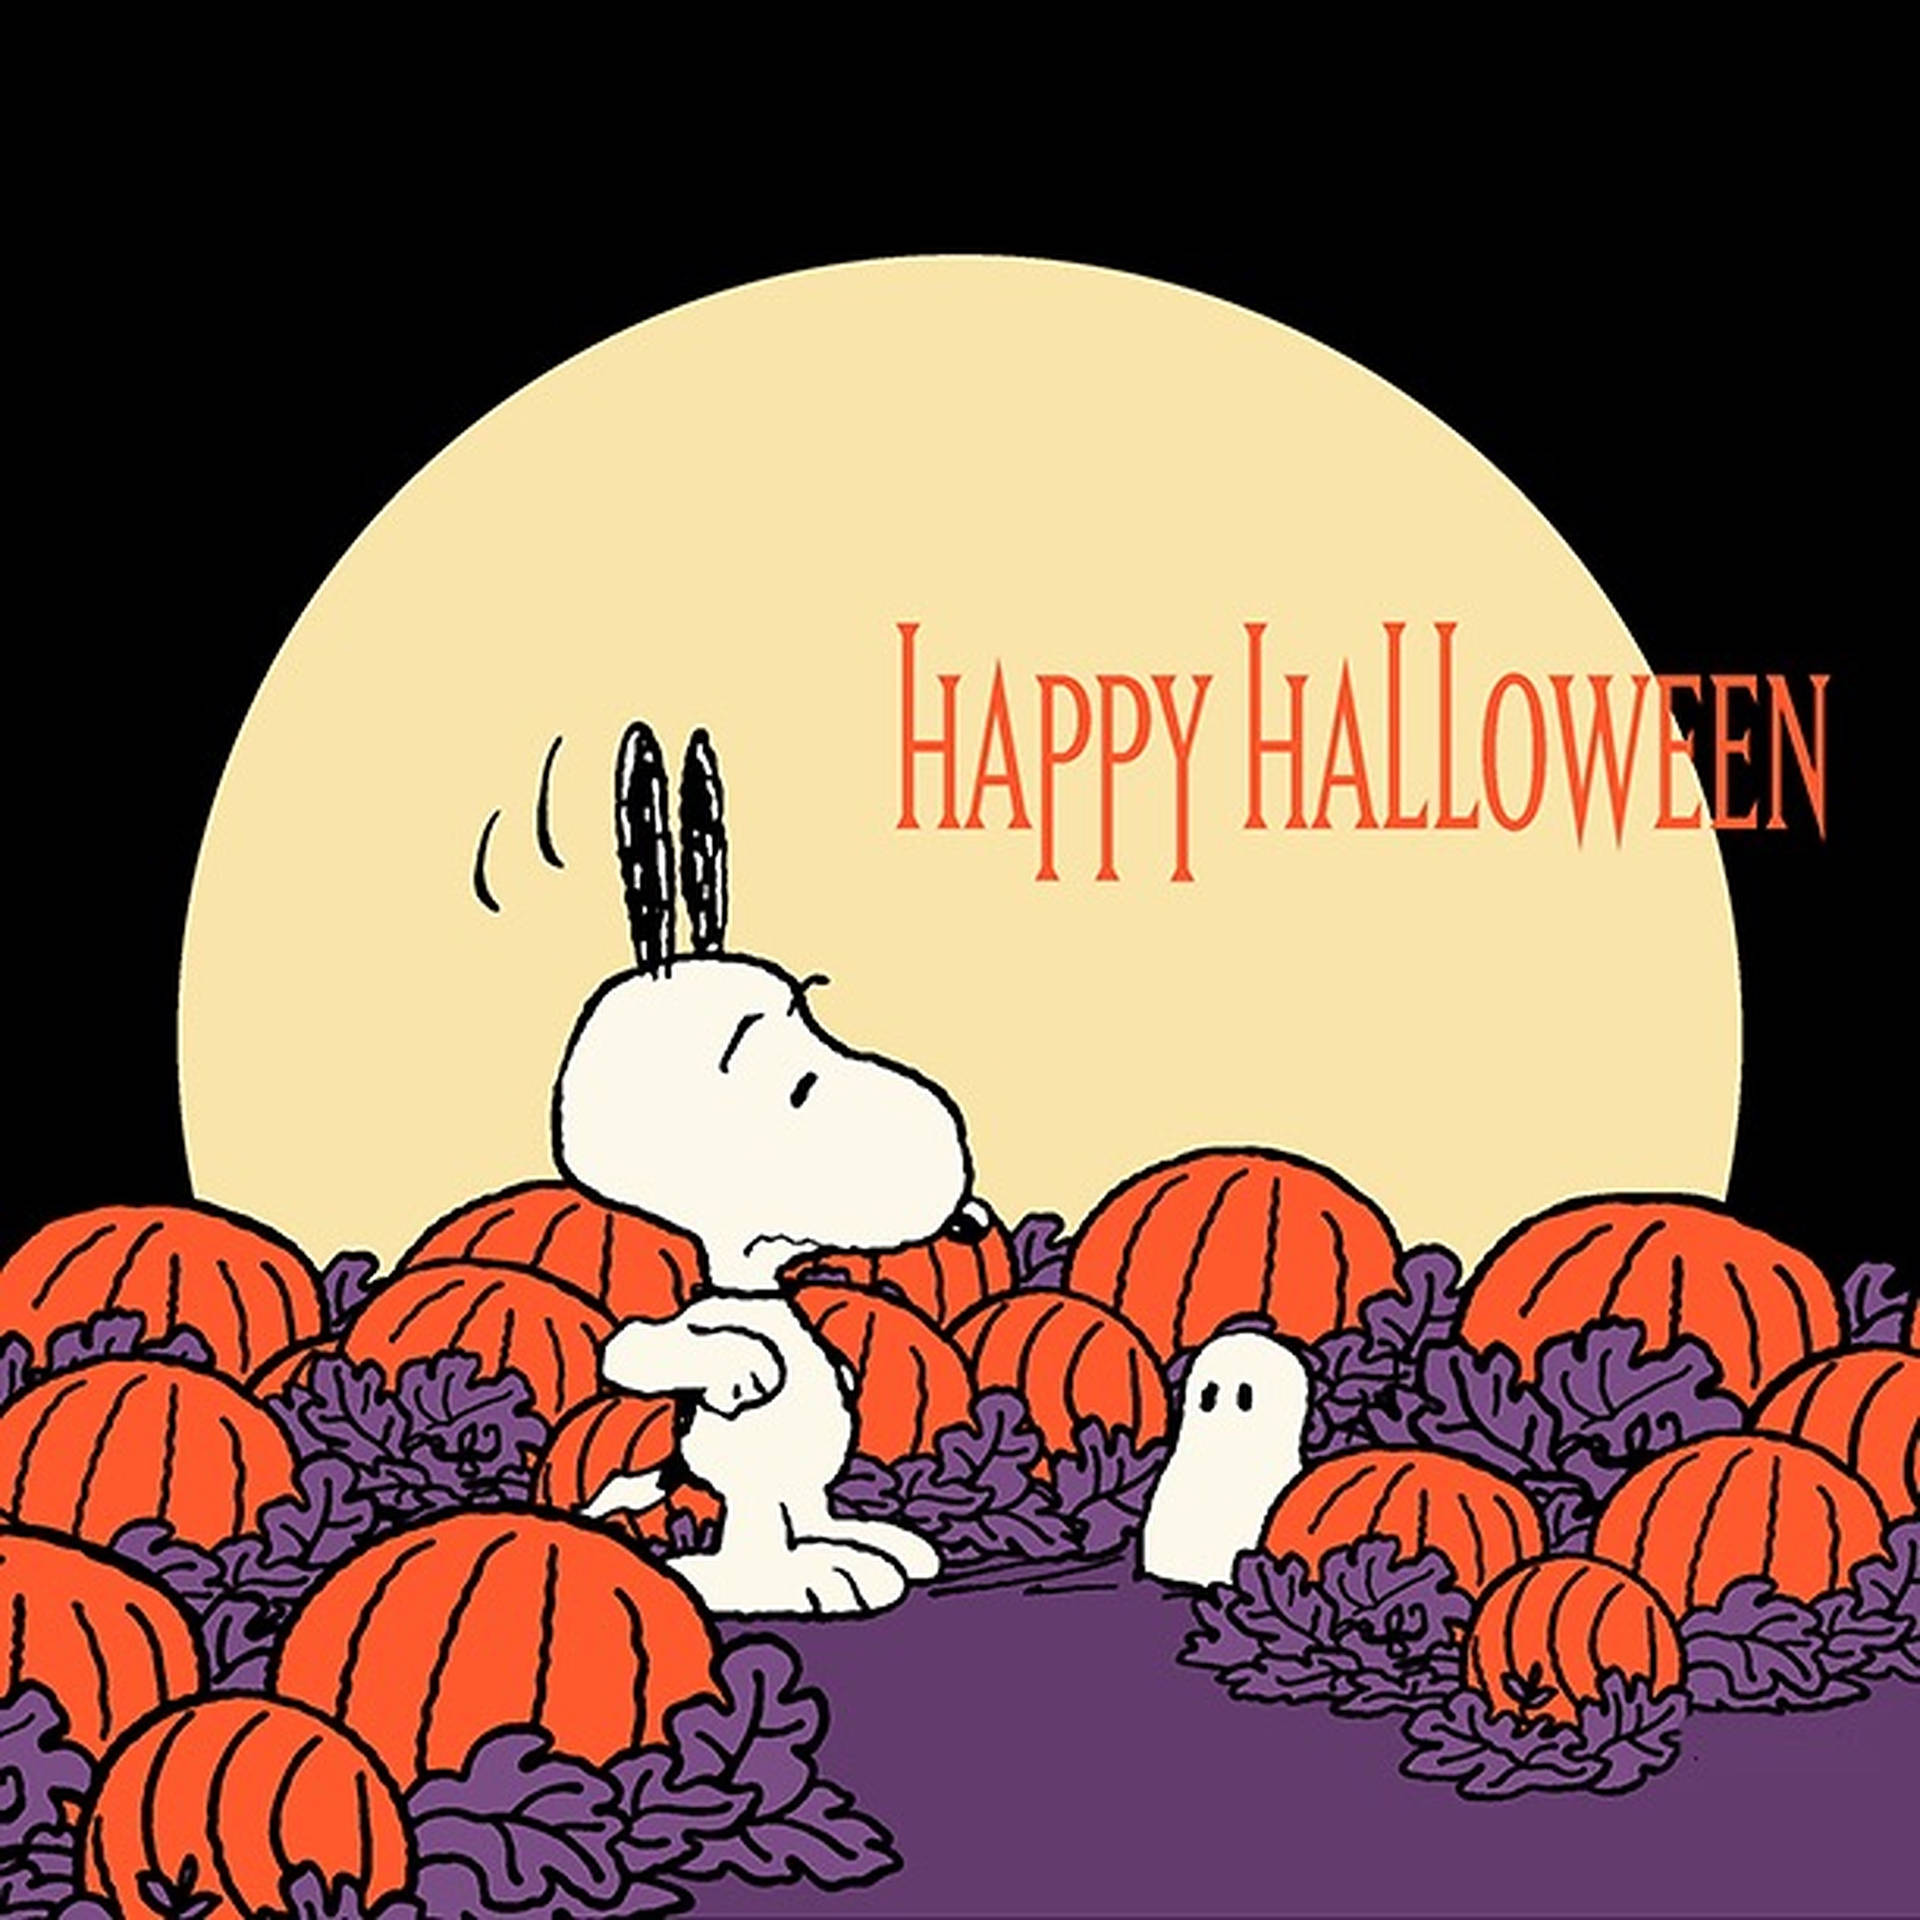 Charlie Brown Halloween Snoopy Vector Art Background